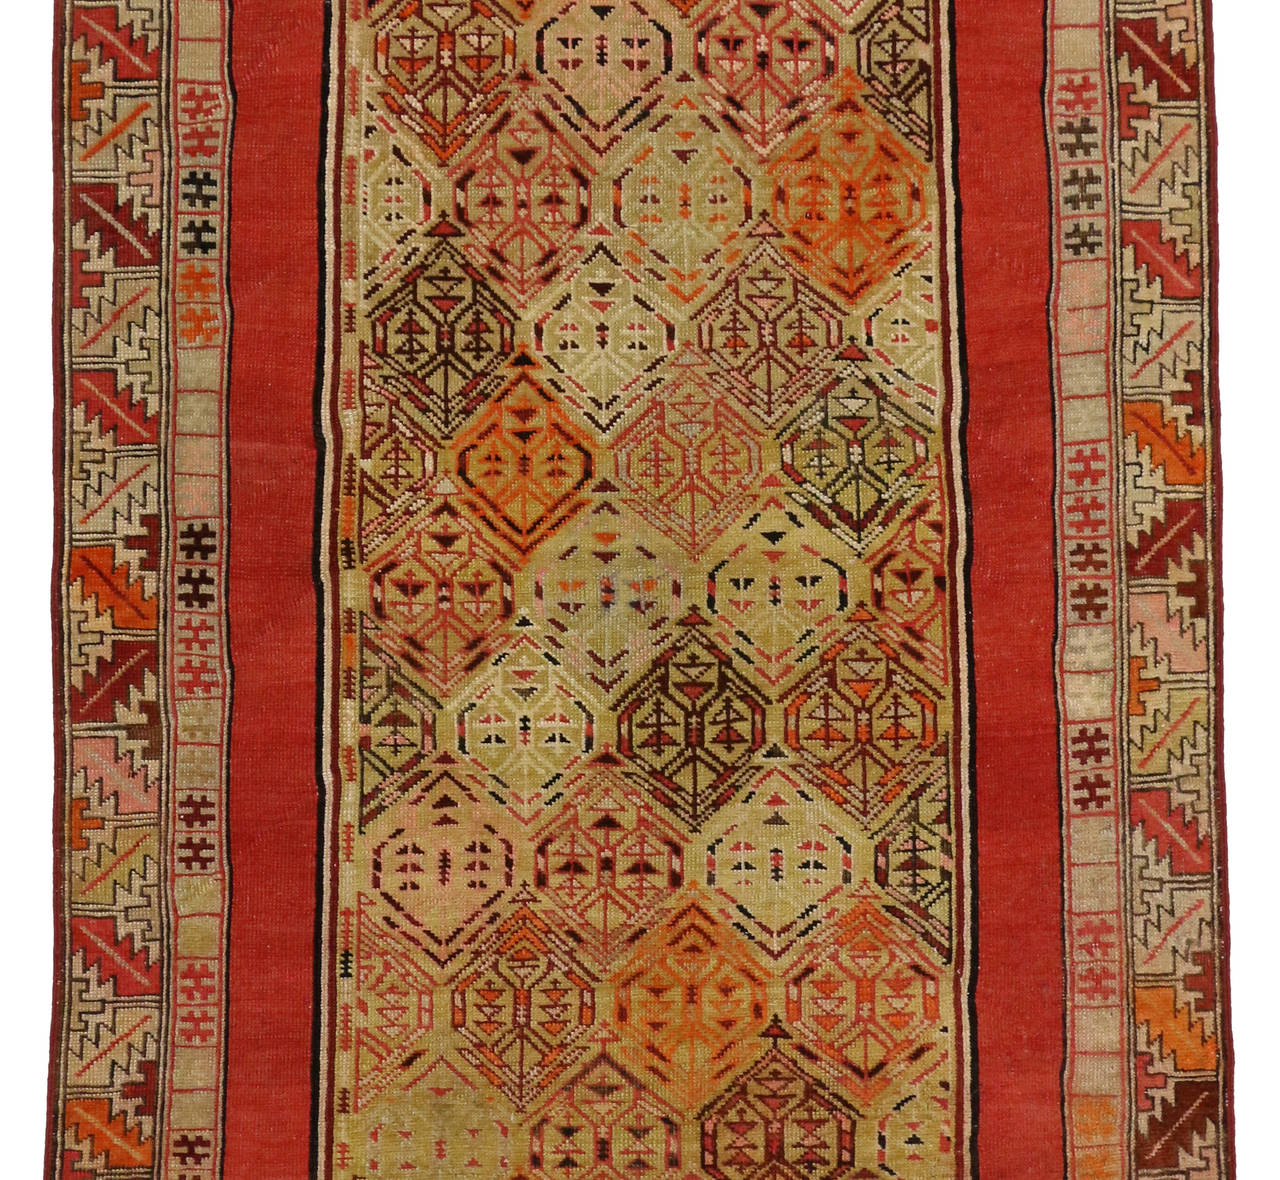 20th Century Antique Turkish Oushak Carpet Runner with Modern Art Deco Style